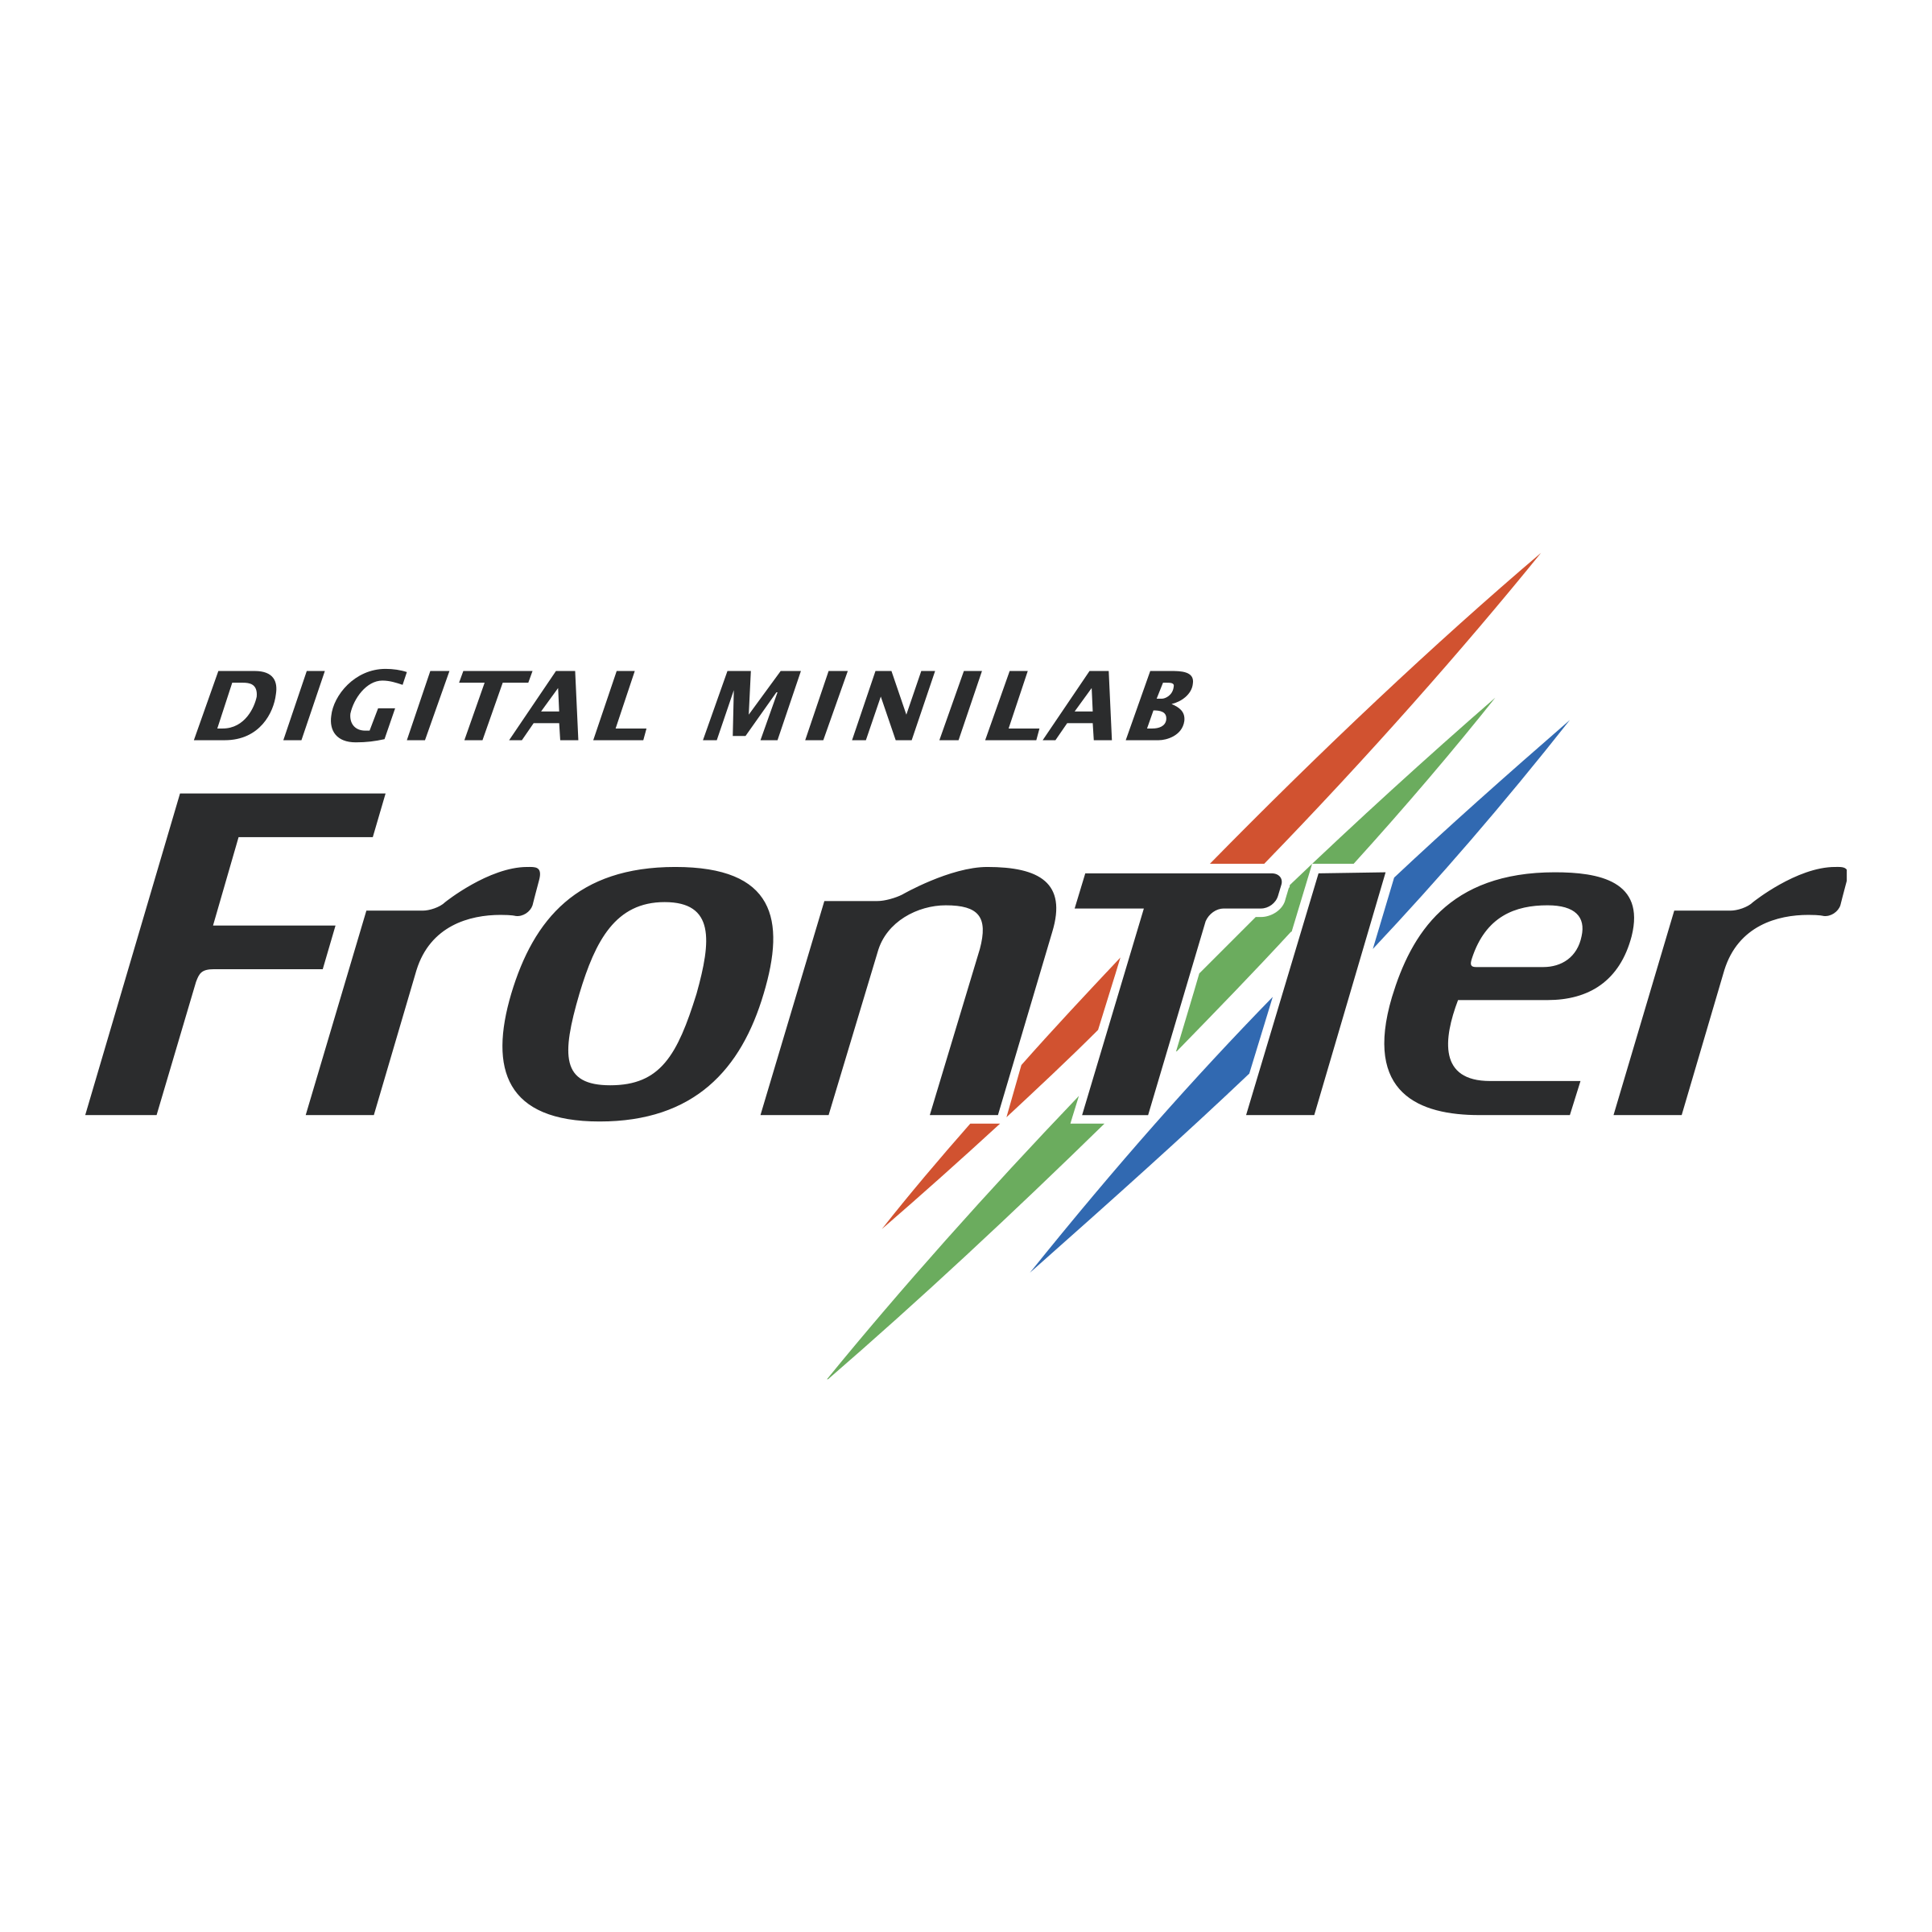 Frontier Logo - Frontier Logo PNG Transparent & SVG Vector - Freebie Supply